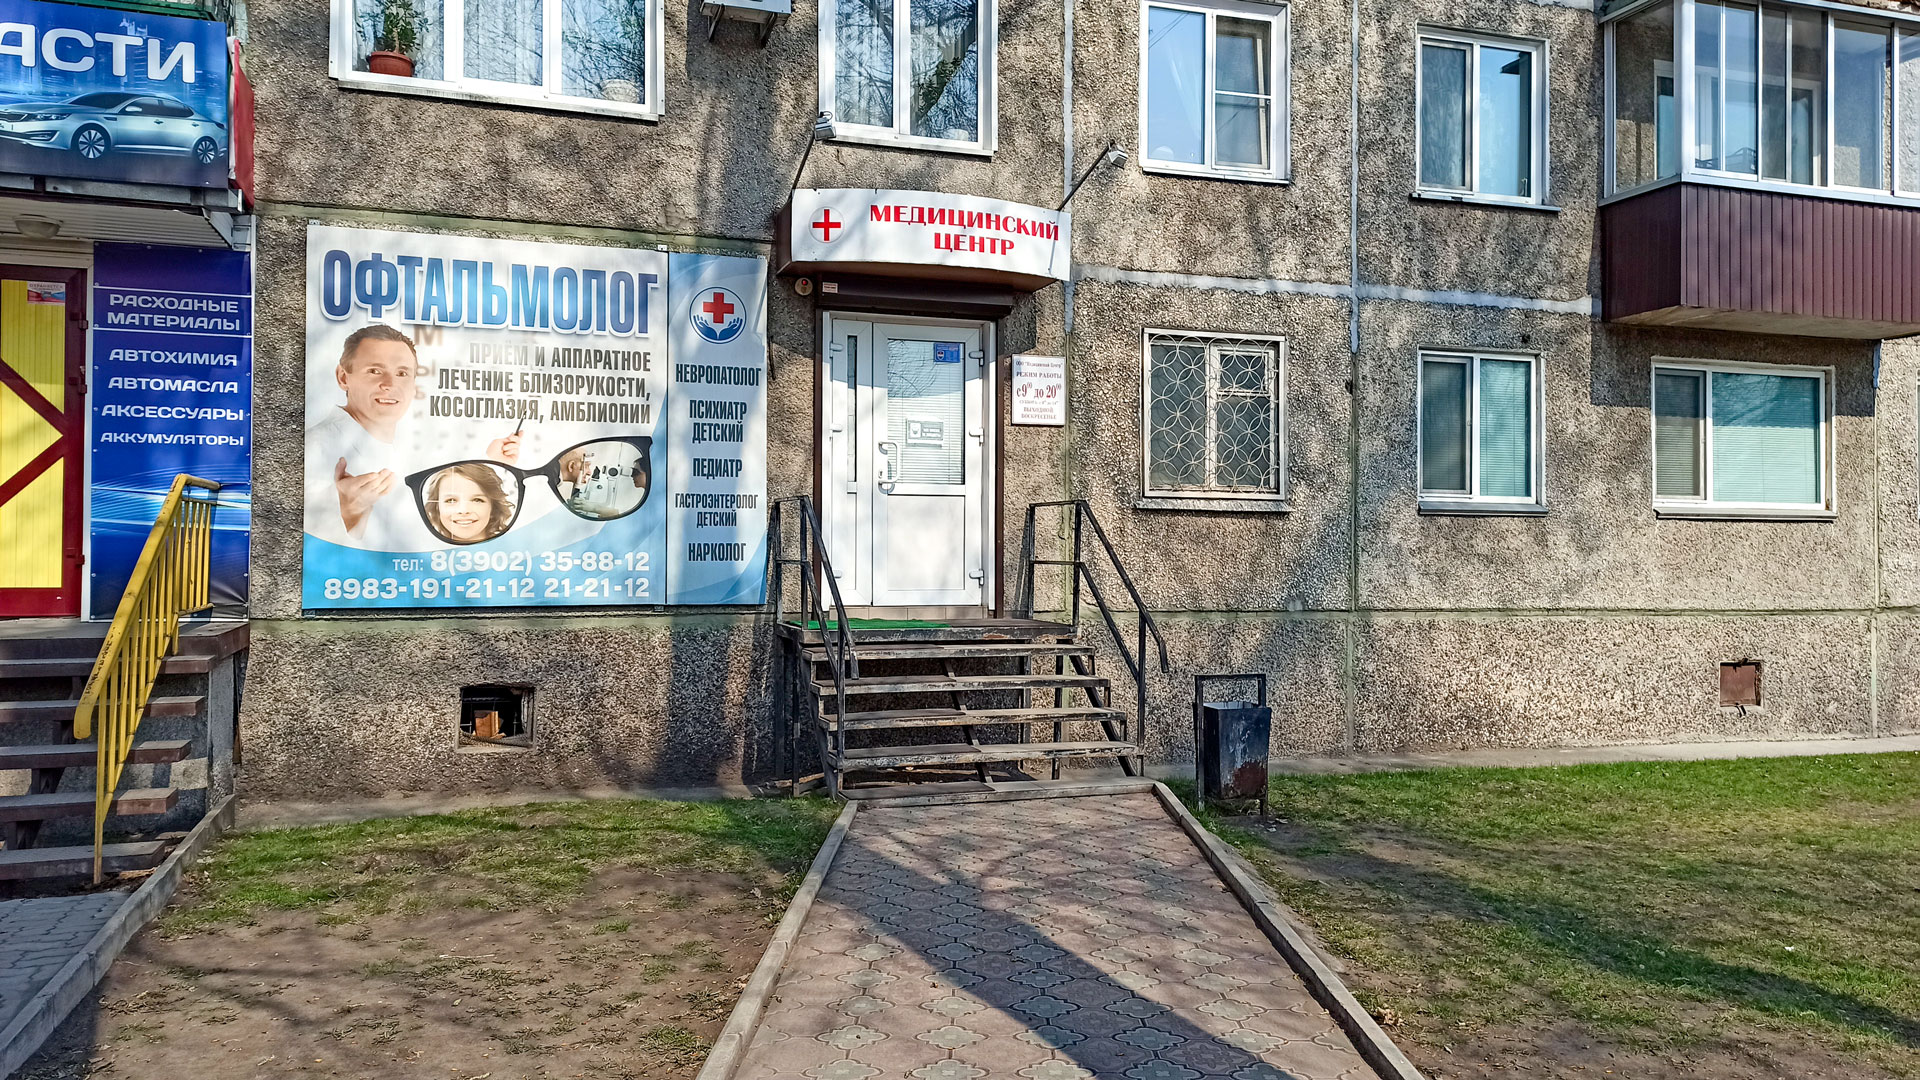 Медицинский центр, ул. Комарова, 2, г. Абакан.